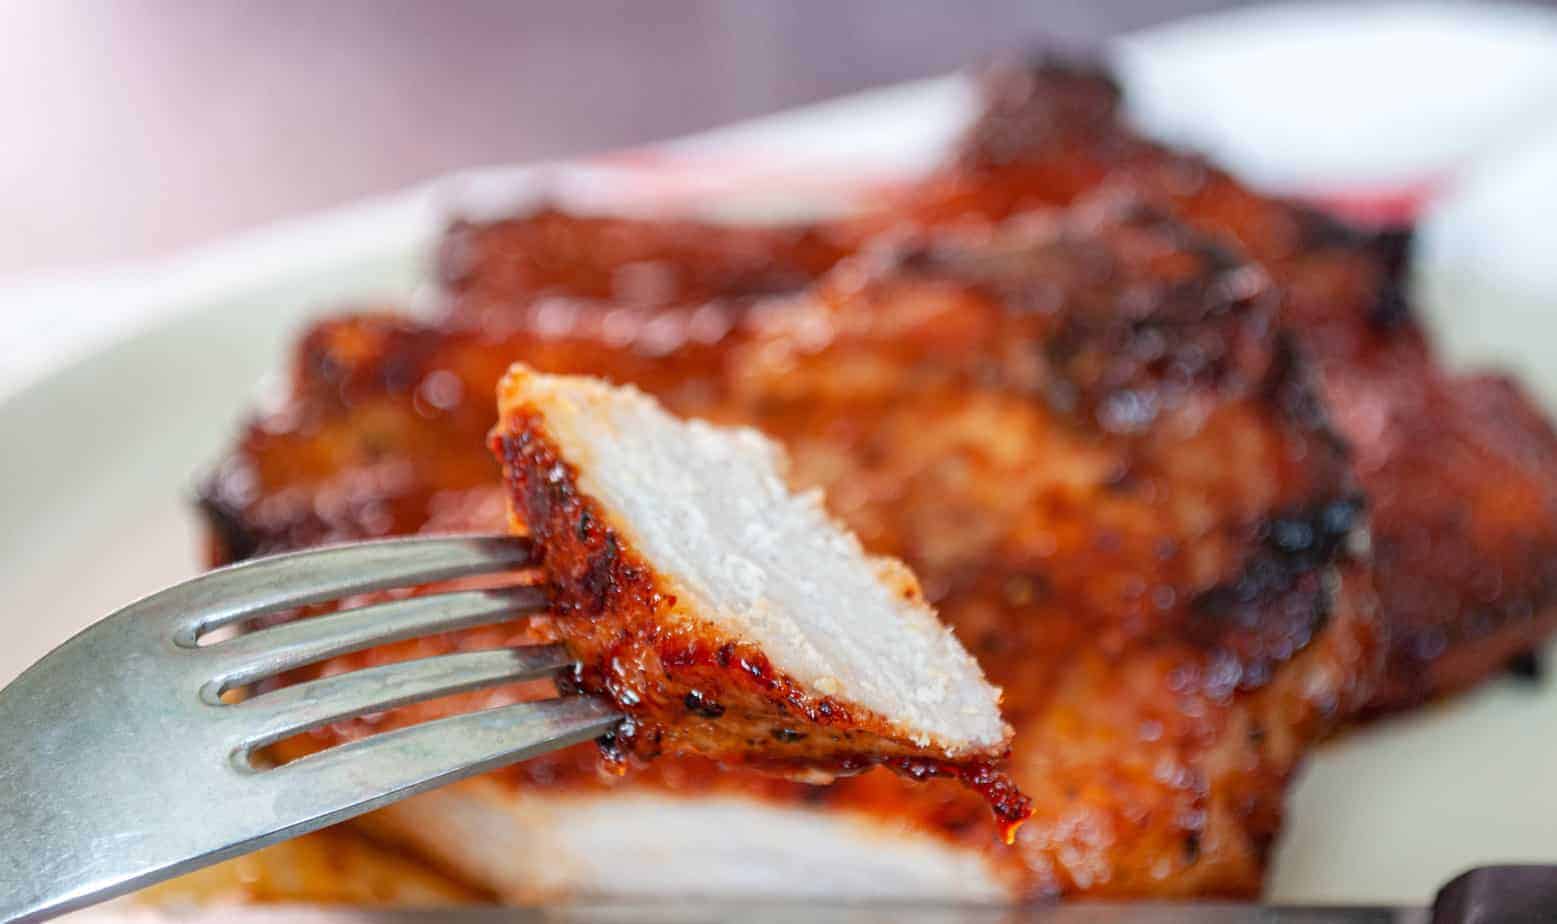 A bite of bbq pork chop on a fork.